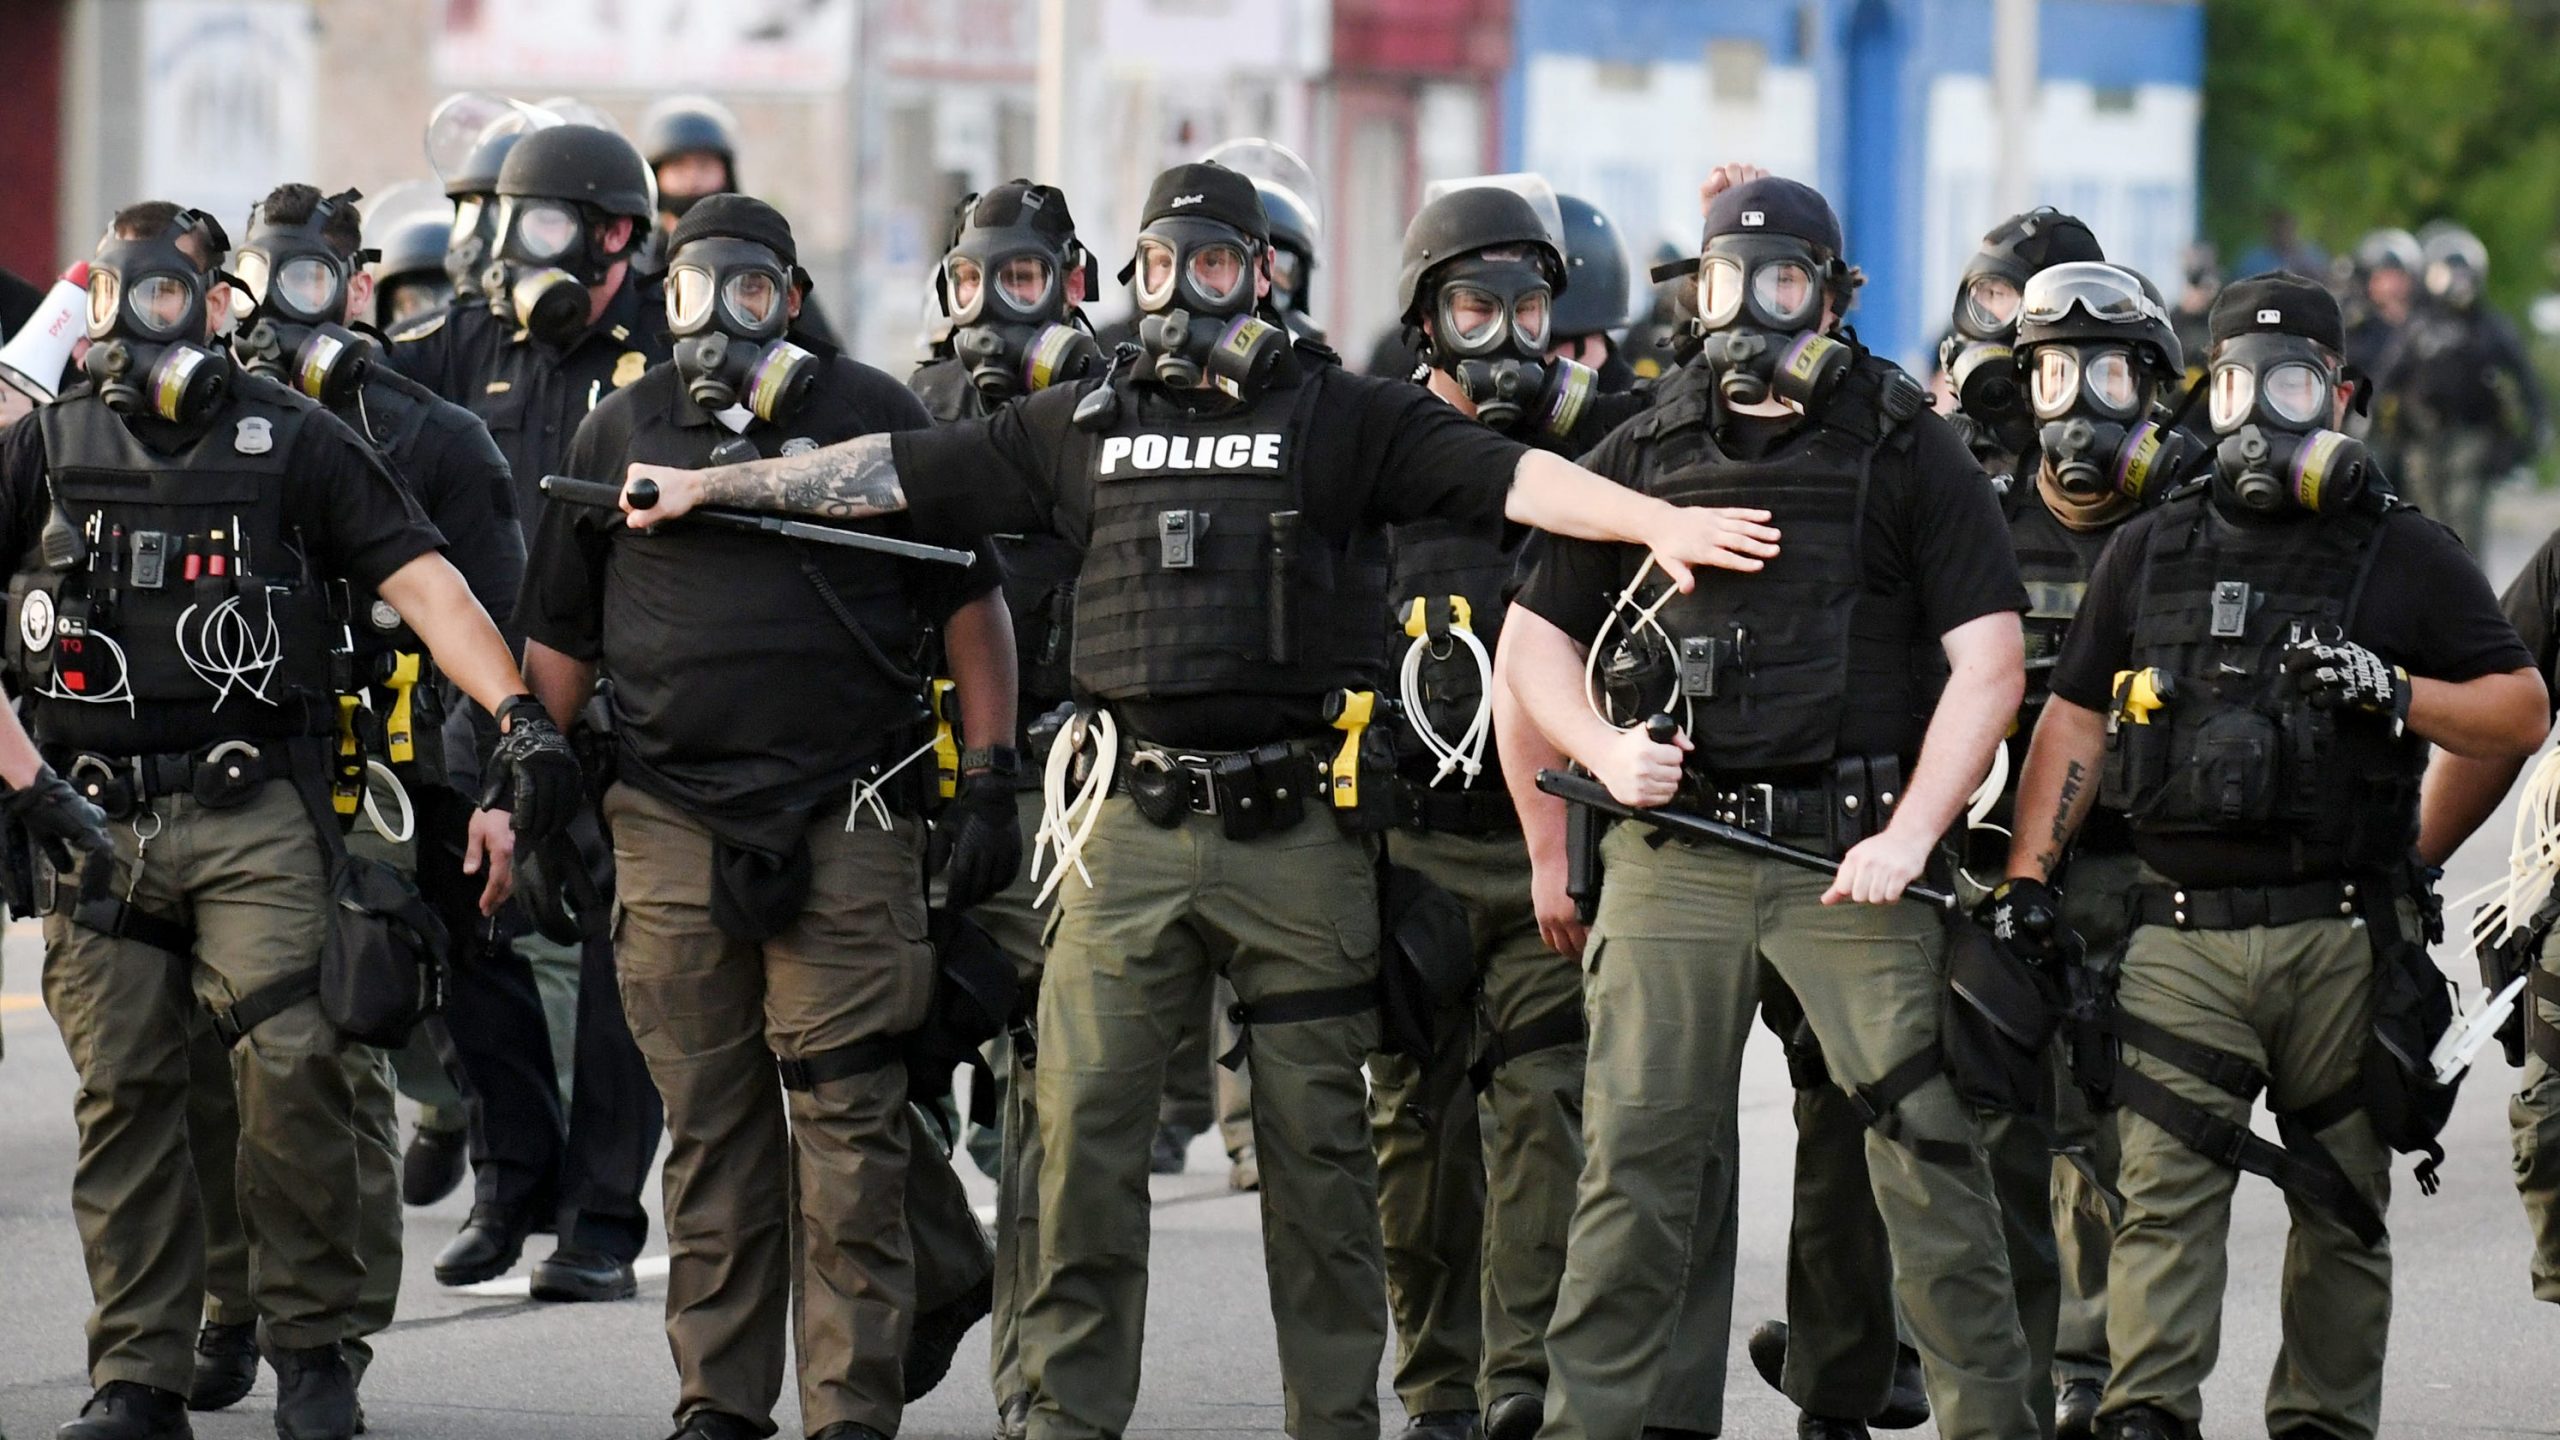 Michigan Senate unanimously approves requiring police bias training